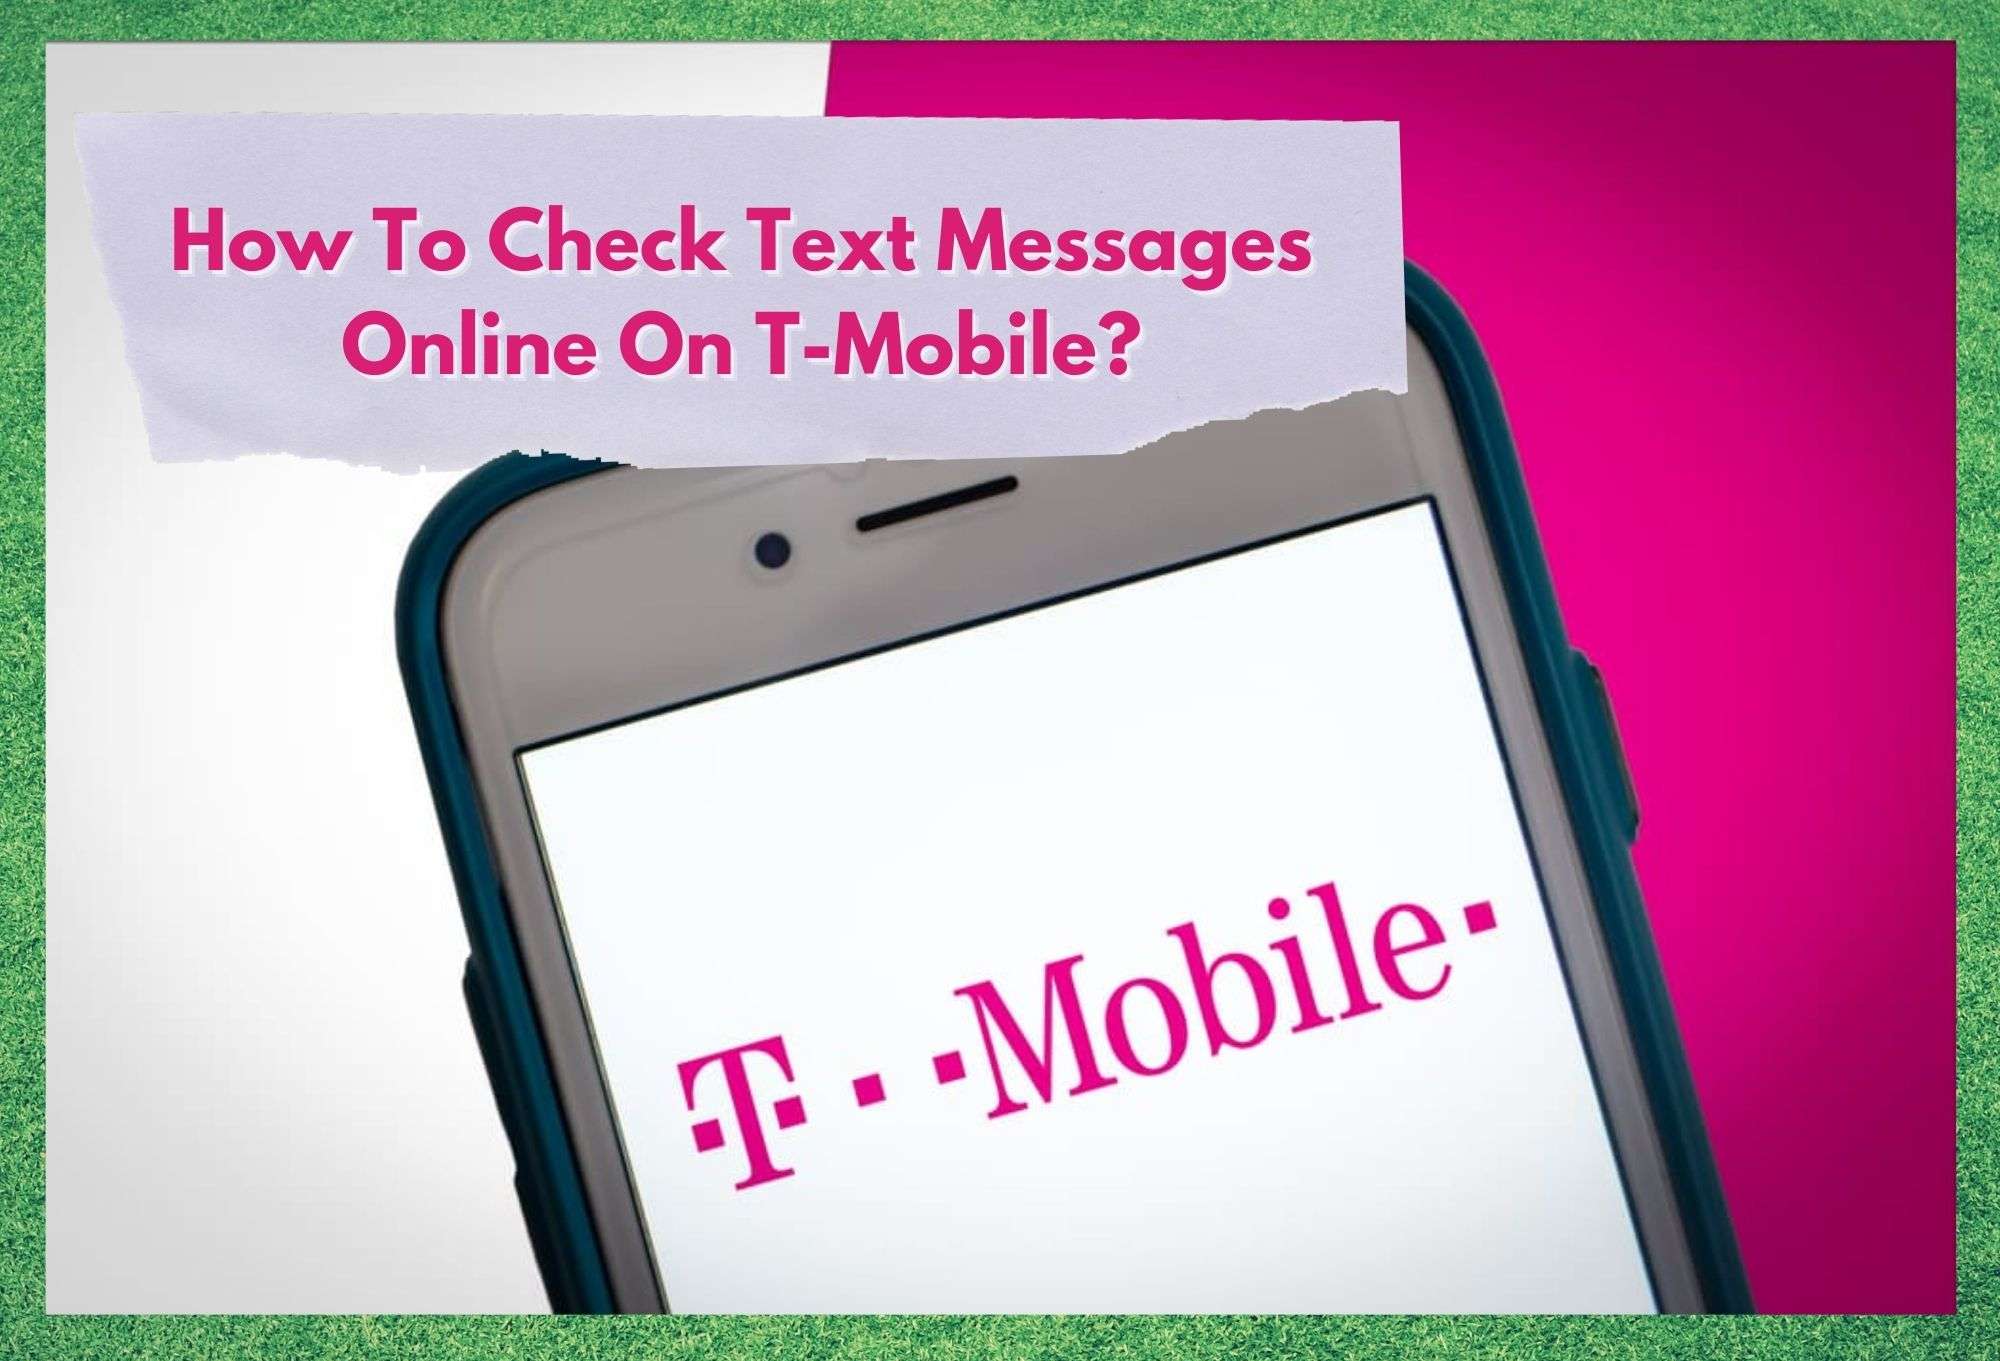 Hoe sms'jes online controleren op T-Mobile?